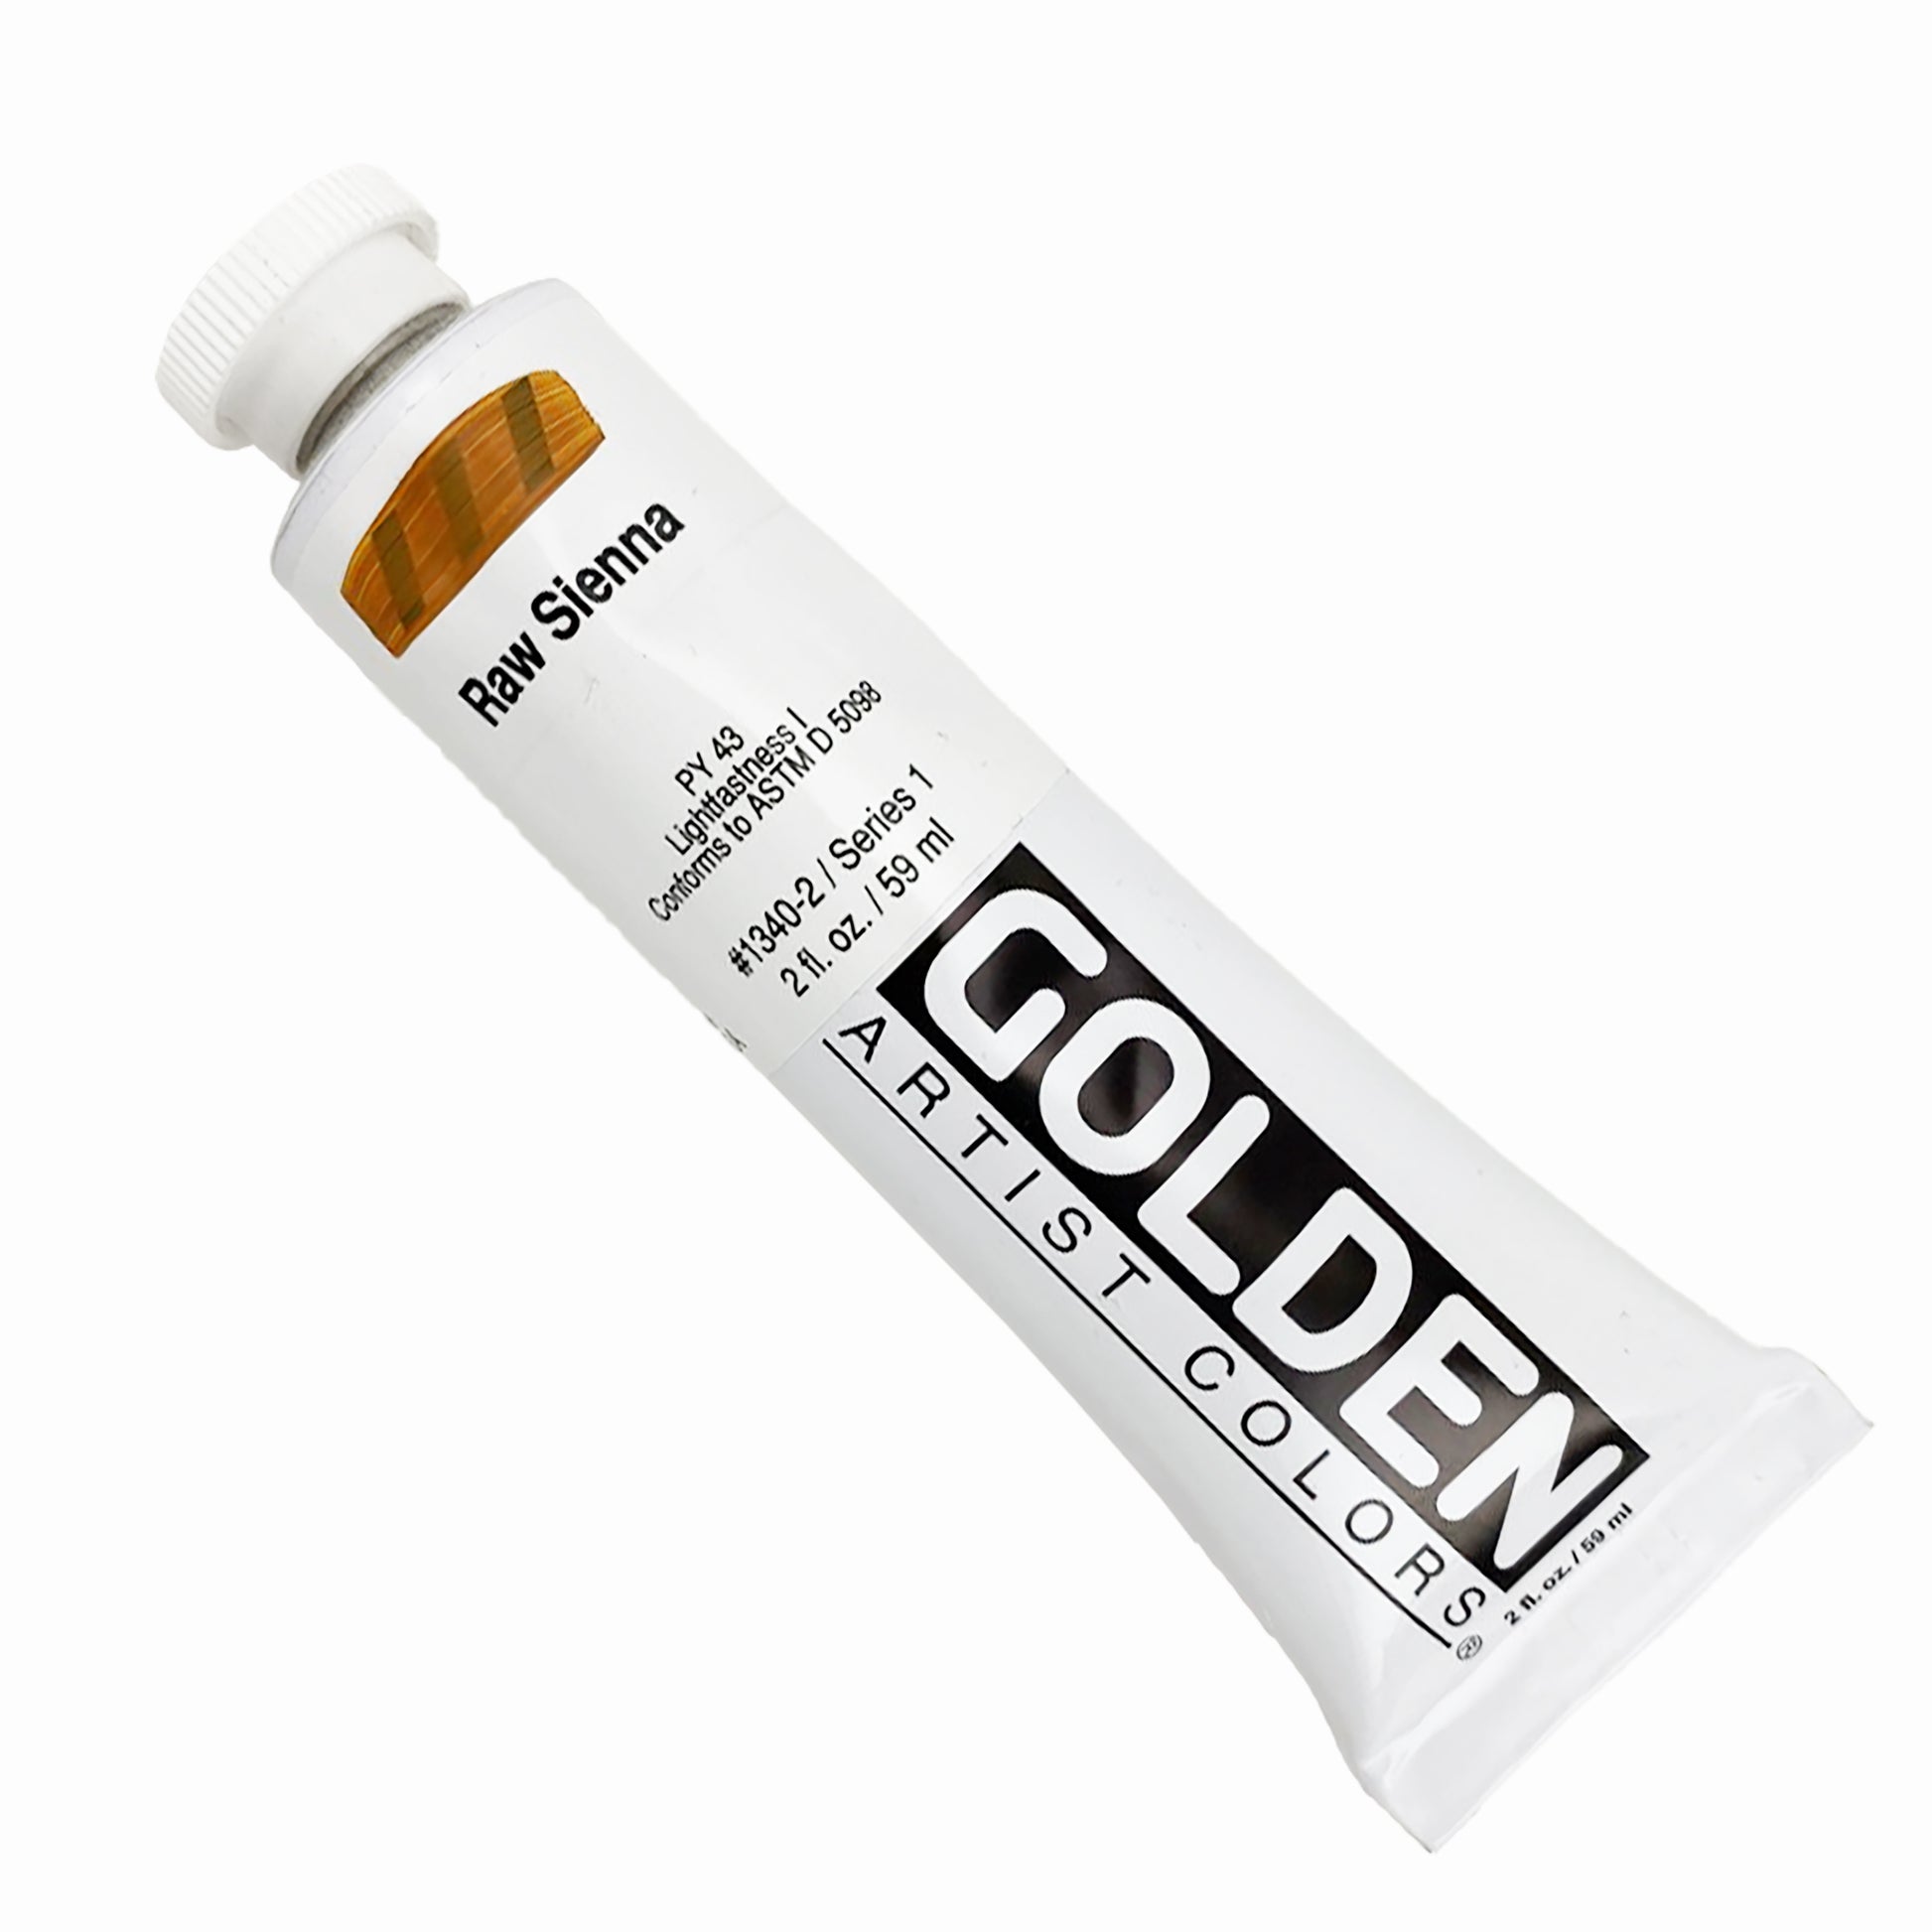 Golden Open Acrylic 5 oz - Bone Black